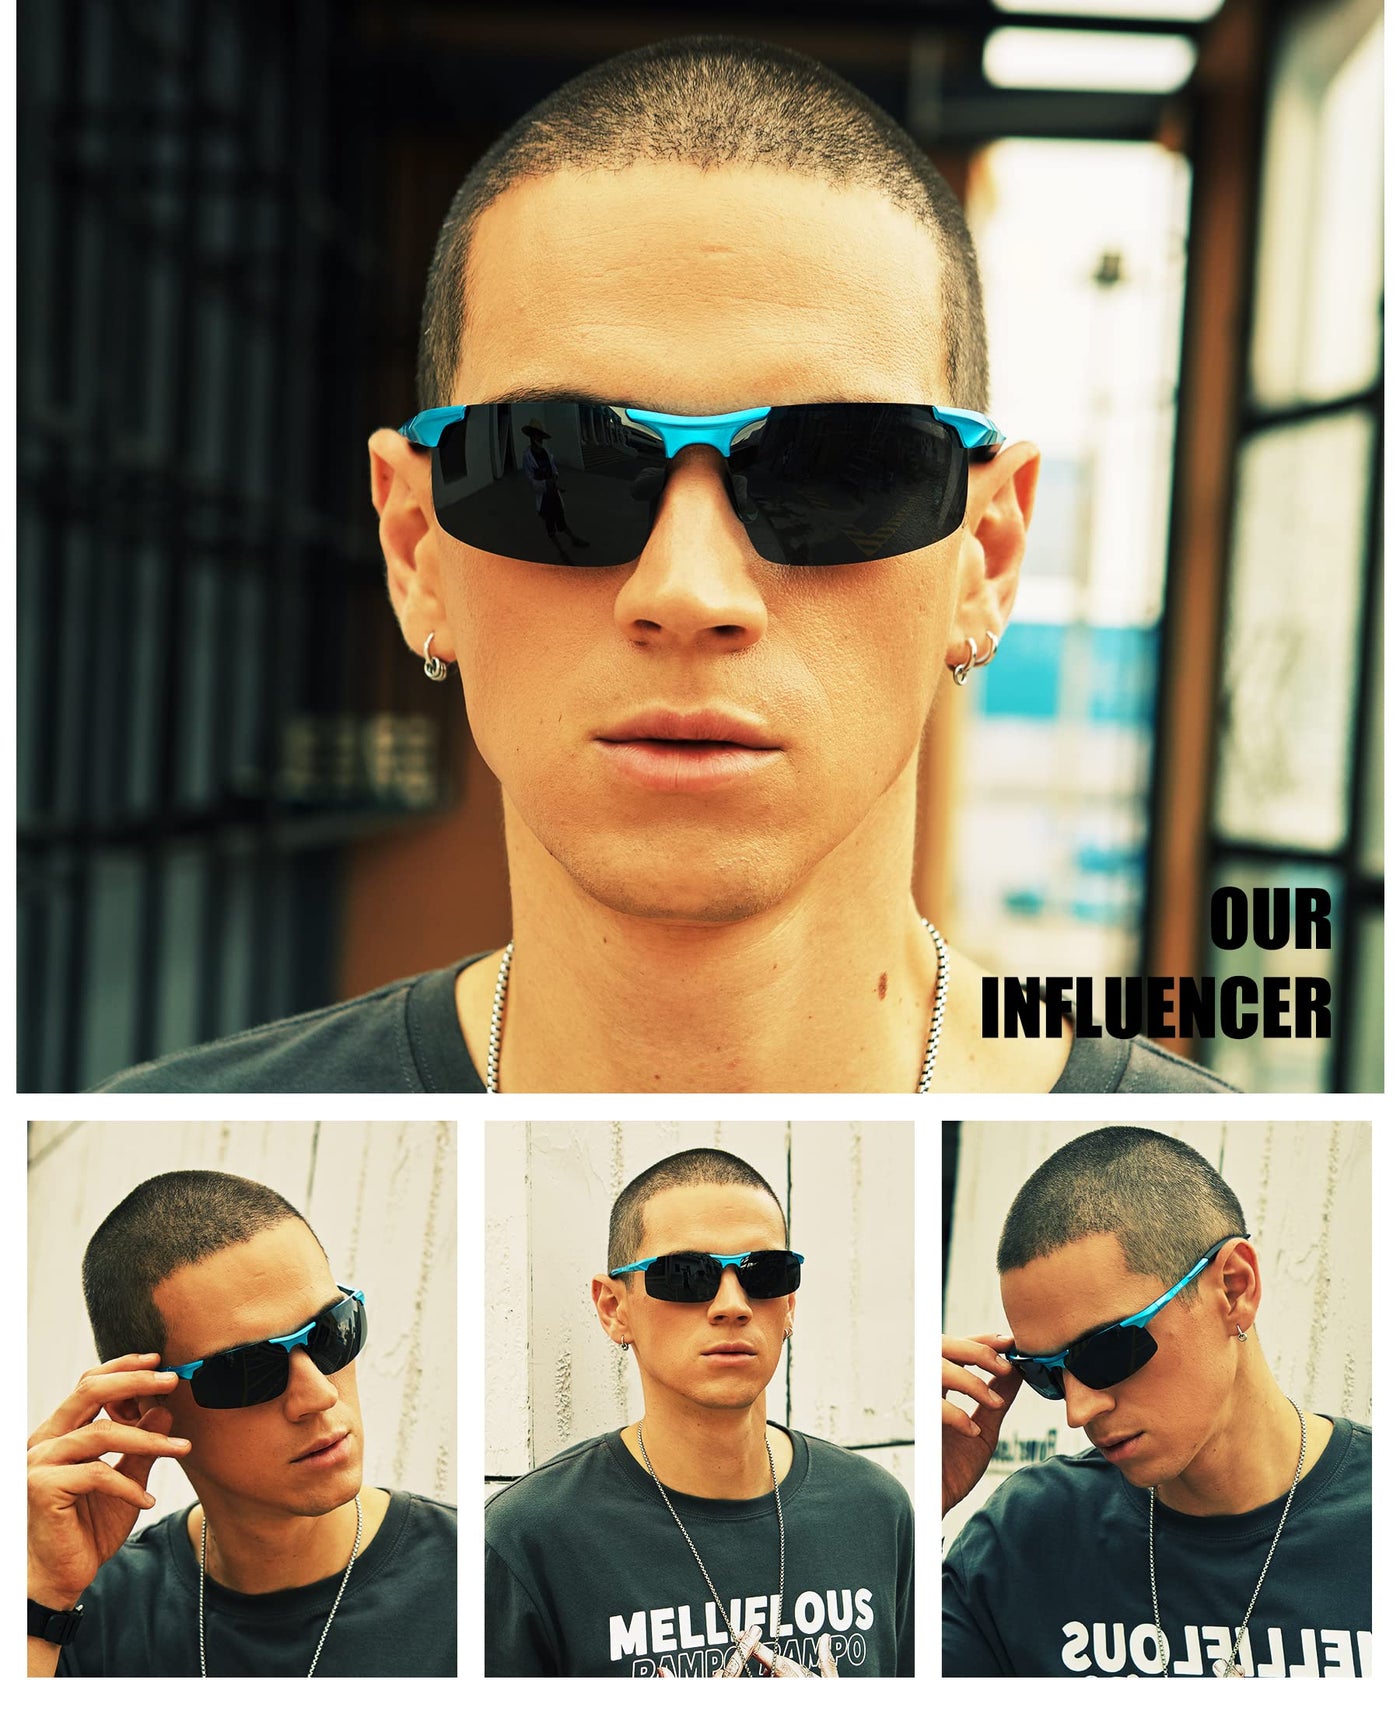 DUCO Men's Polarized Sunglasses for Fishing Driving 8177s